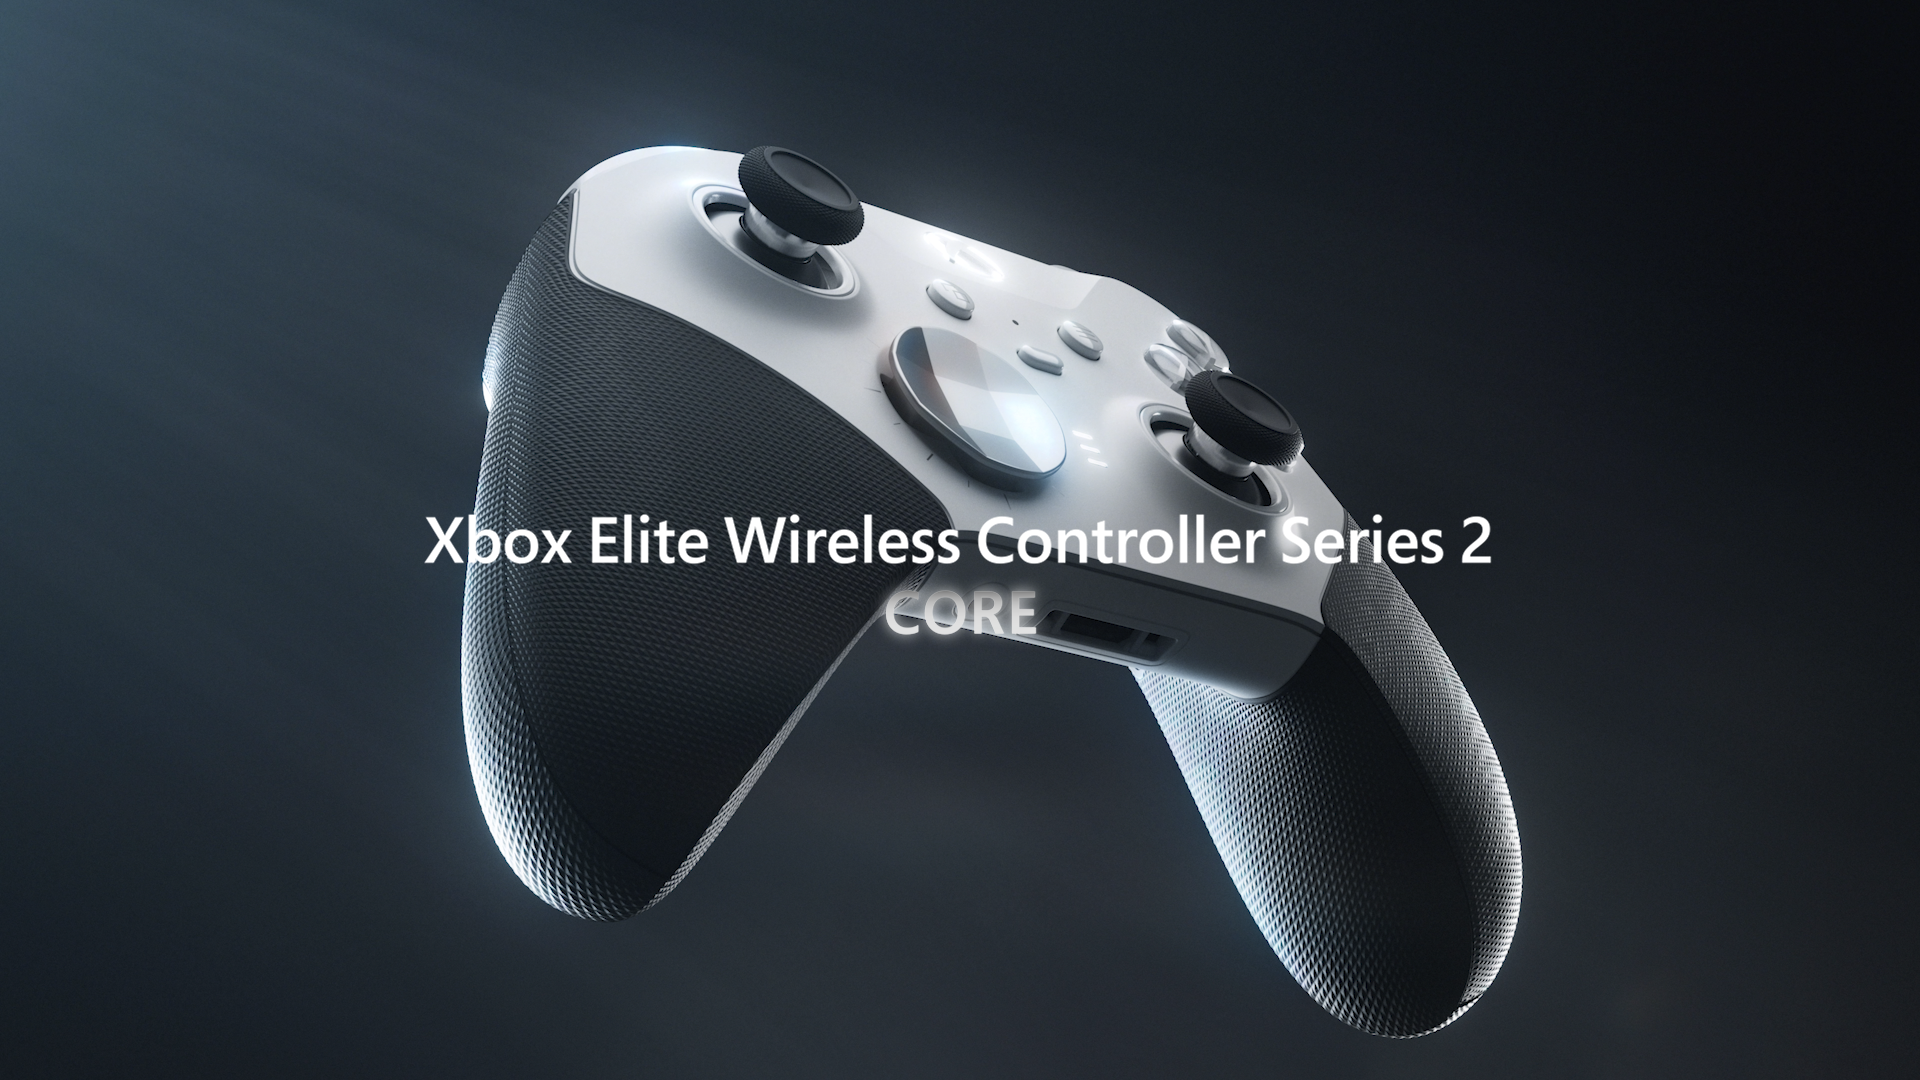 Microsoft Xbox Elite Series 2 Core Mando Inalámbrico Blanco + Xbox Game  Pass Ultimate 1 Mes Digital